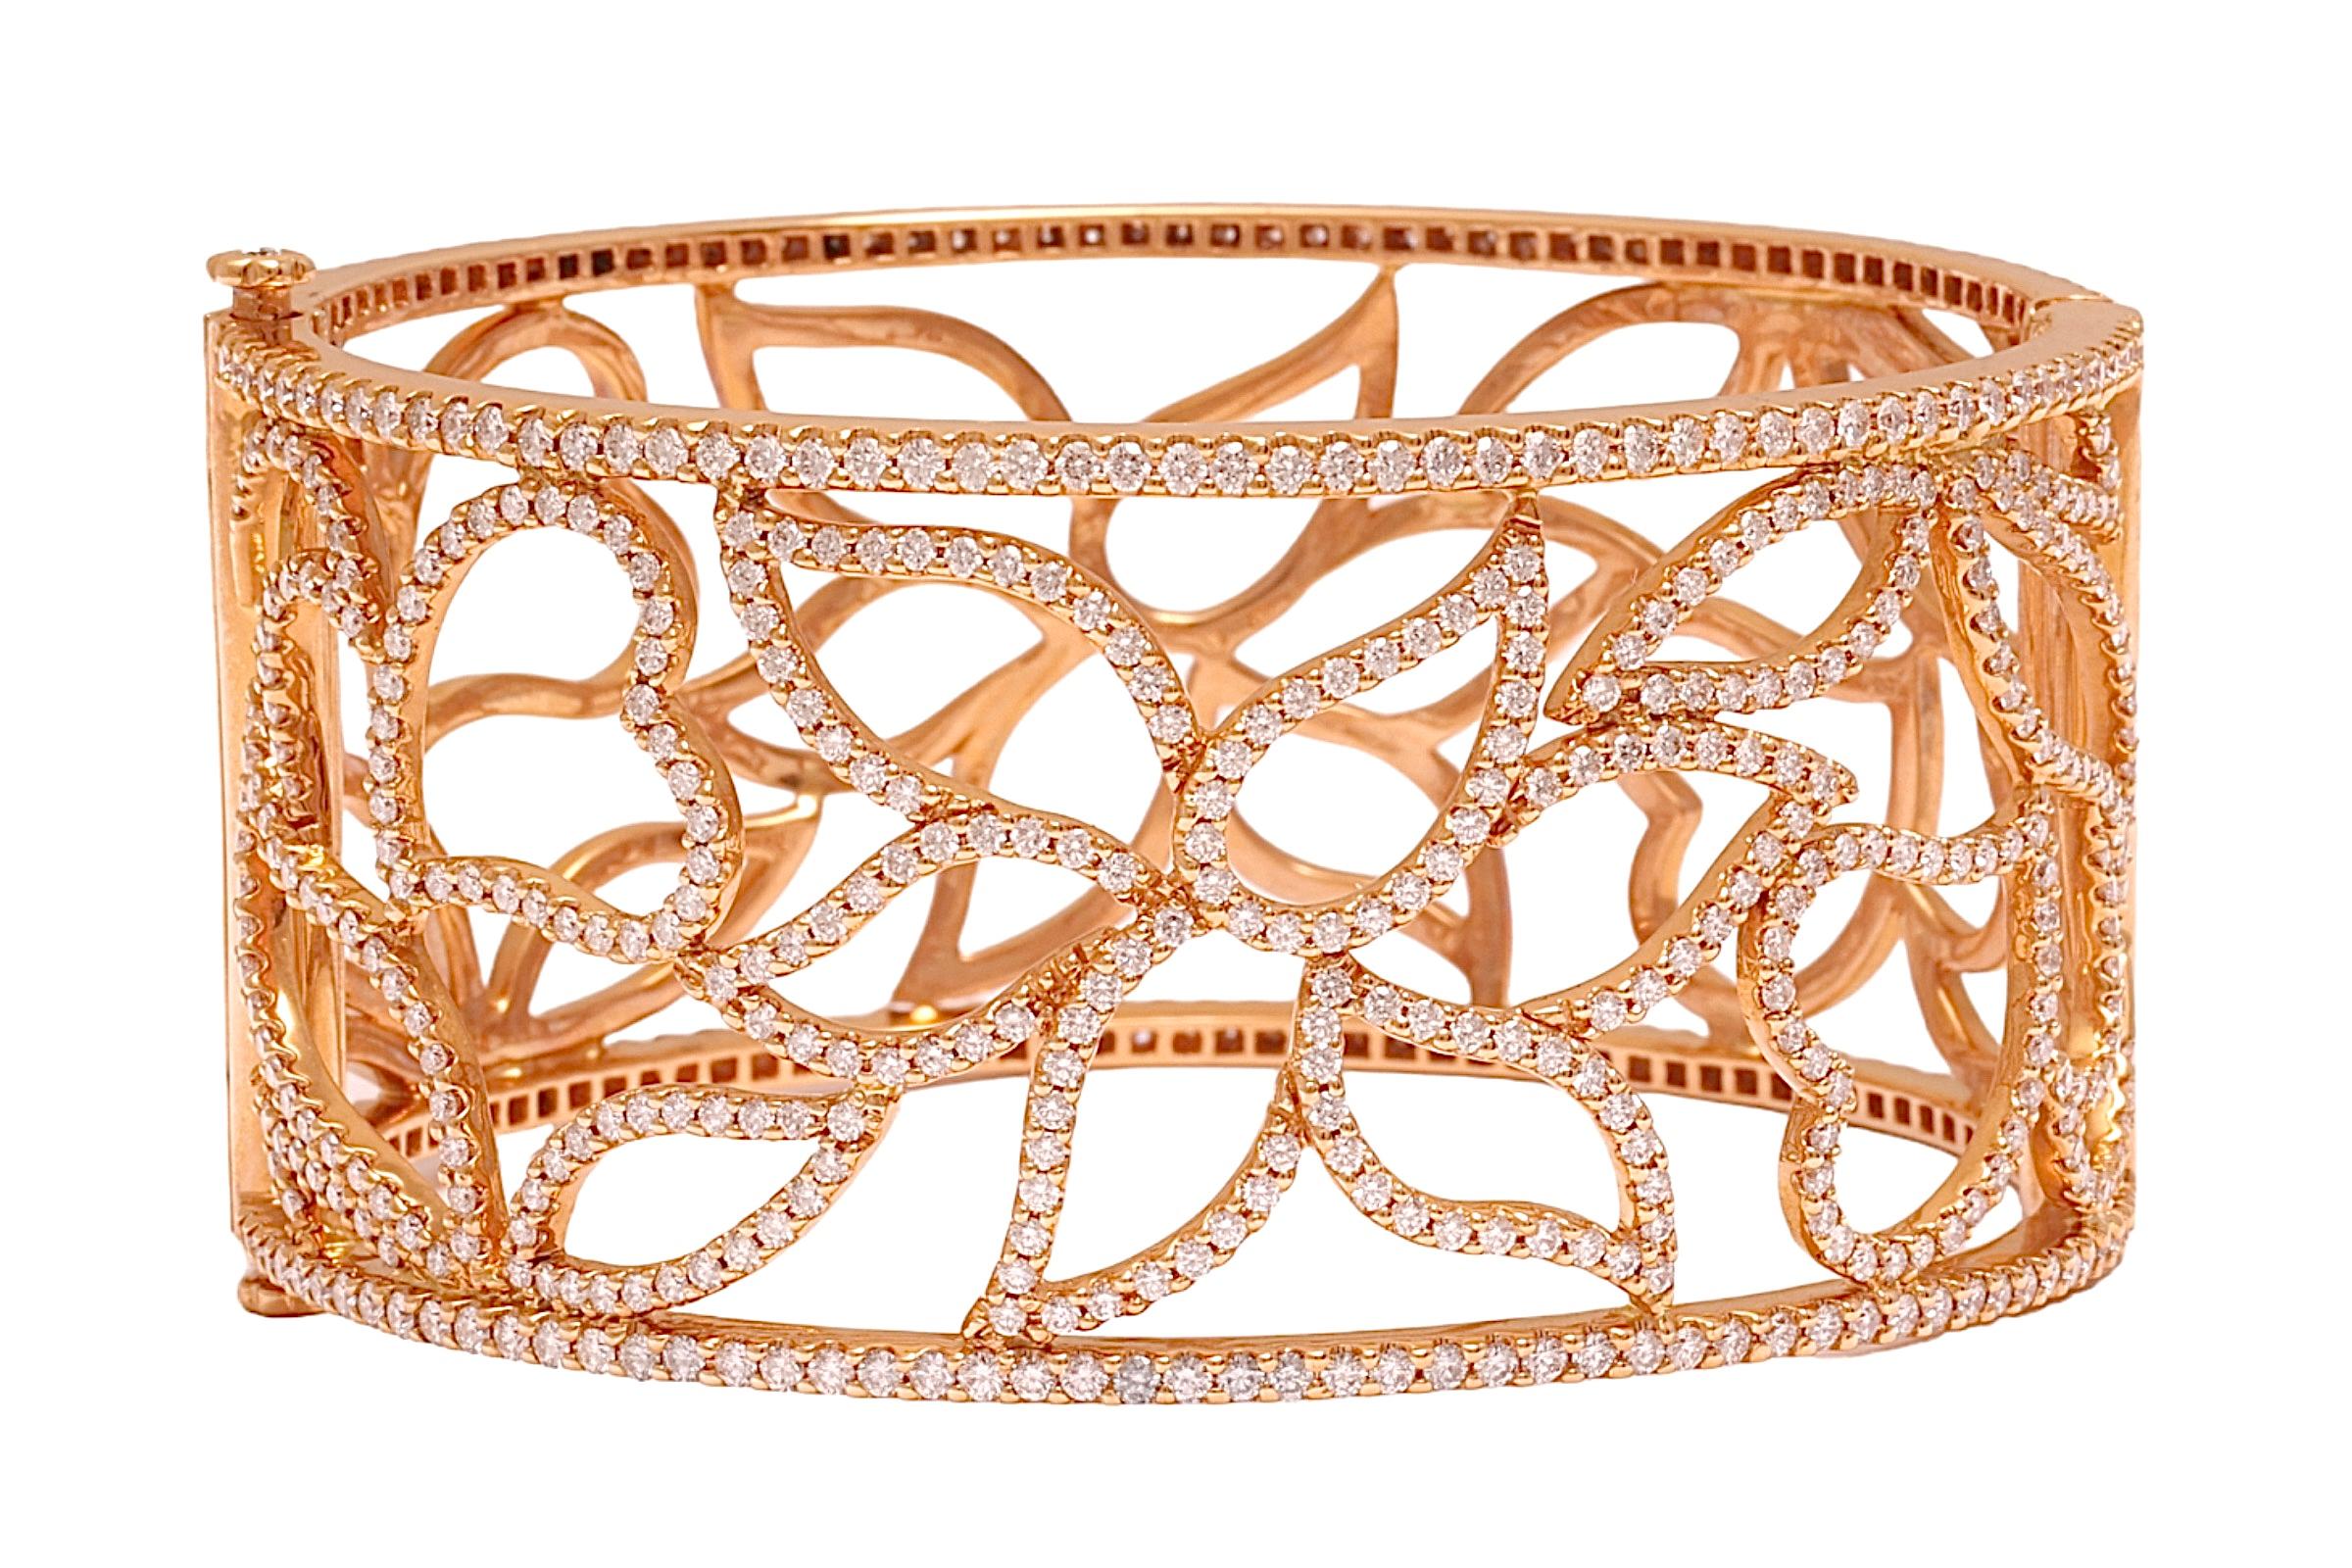 18kt Pink Gold Cuff Bracelet, Flower Design, set with 5.87 ct. Diamonds, 2 Sided For Sale 5